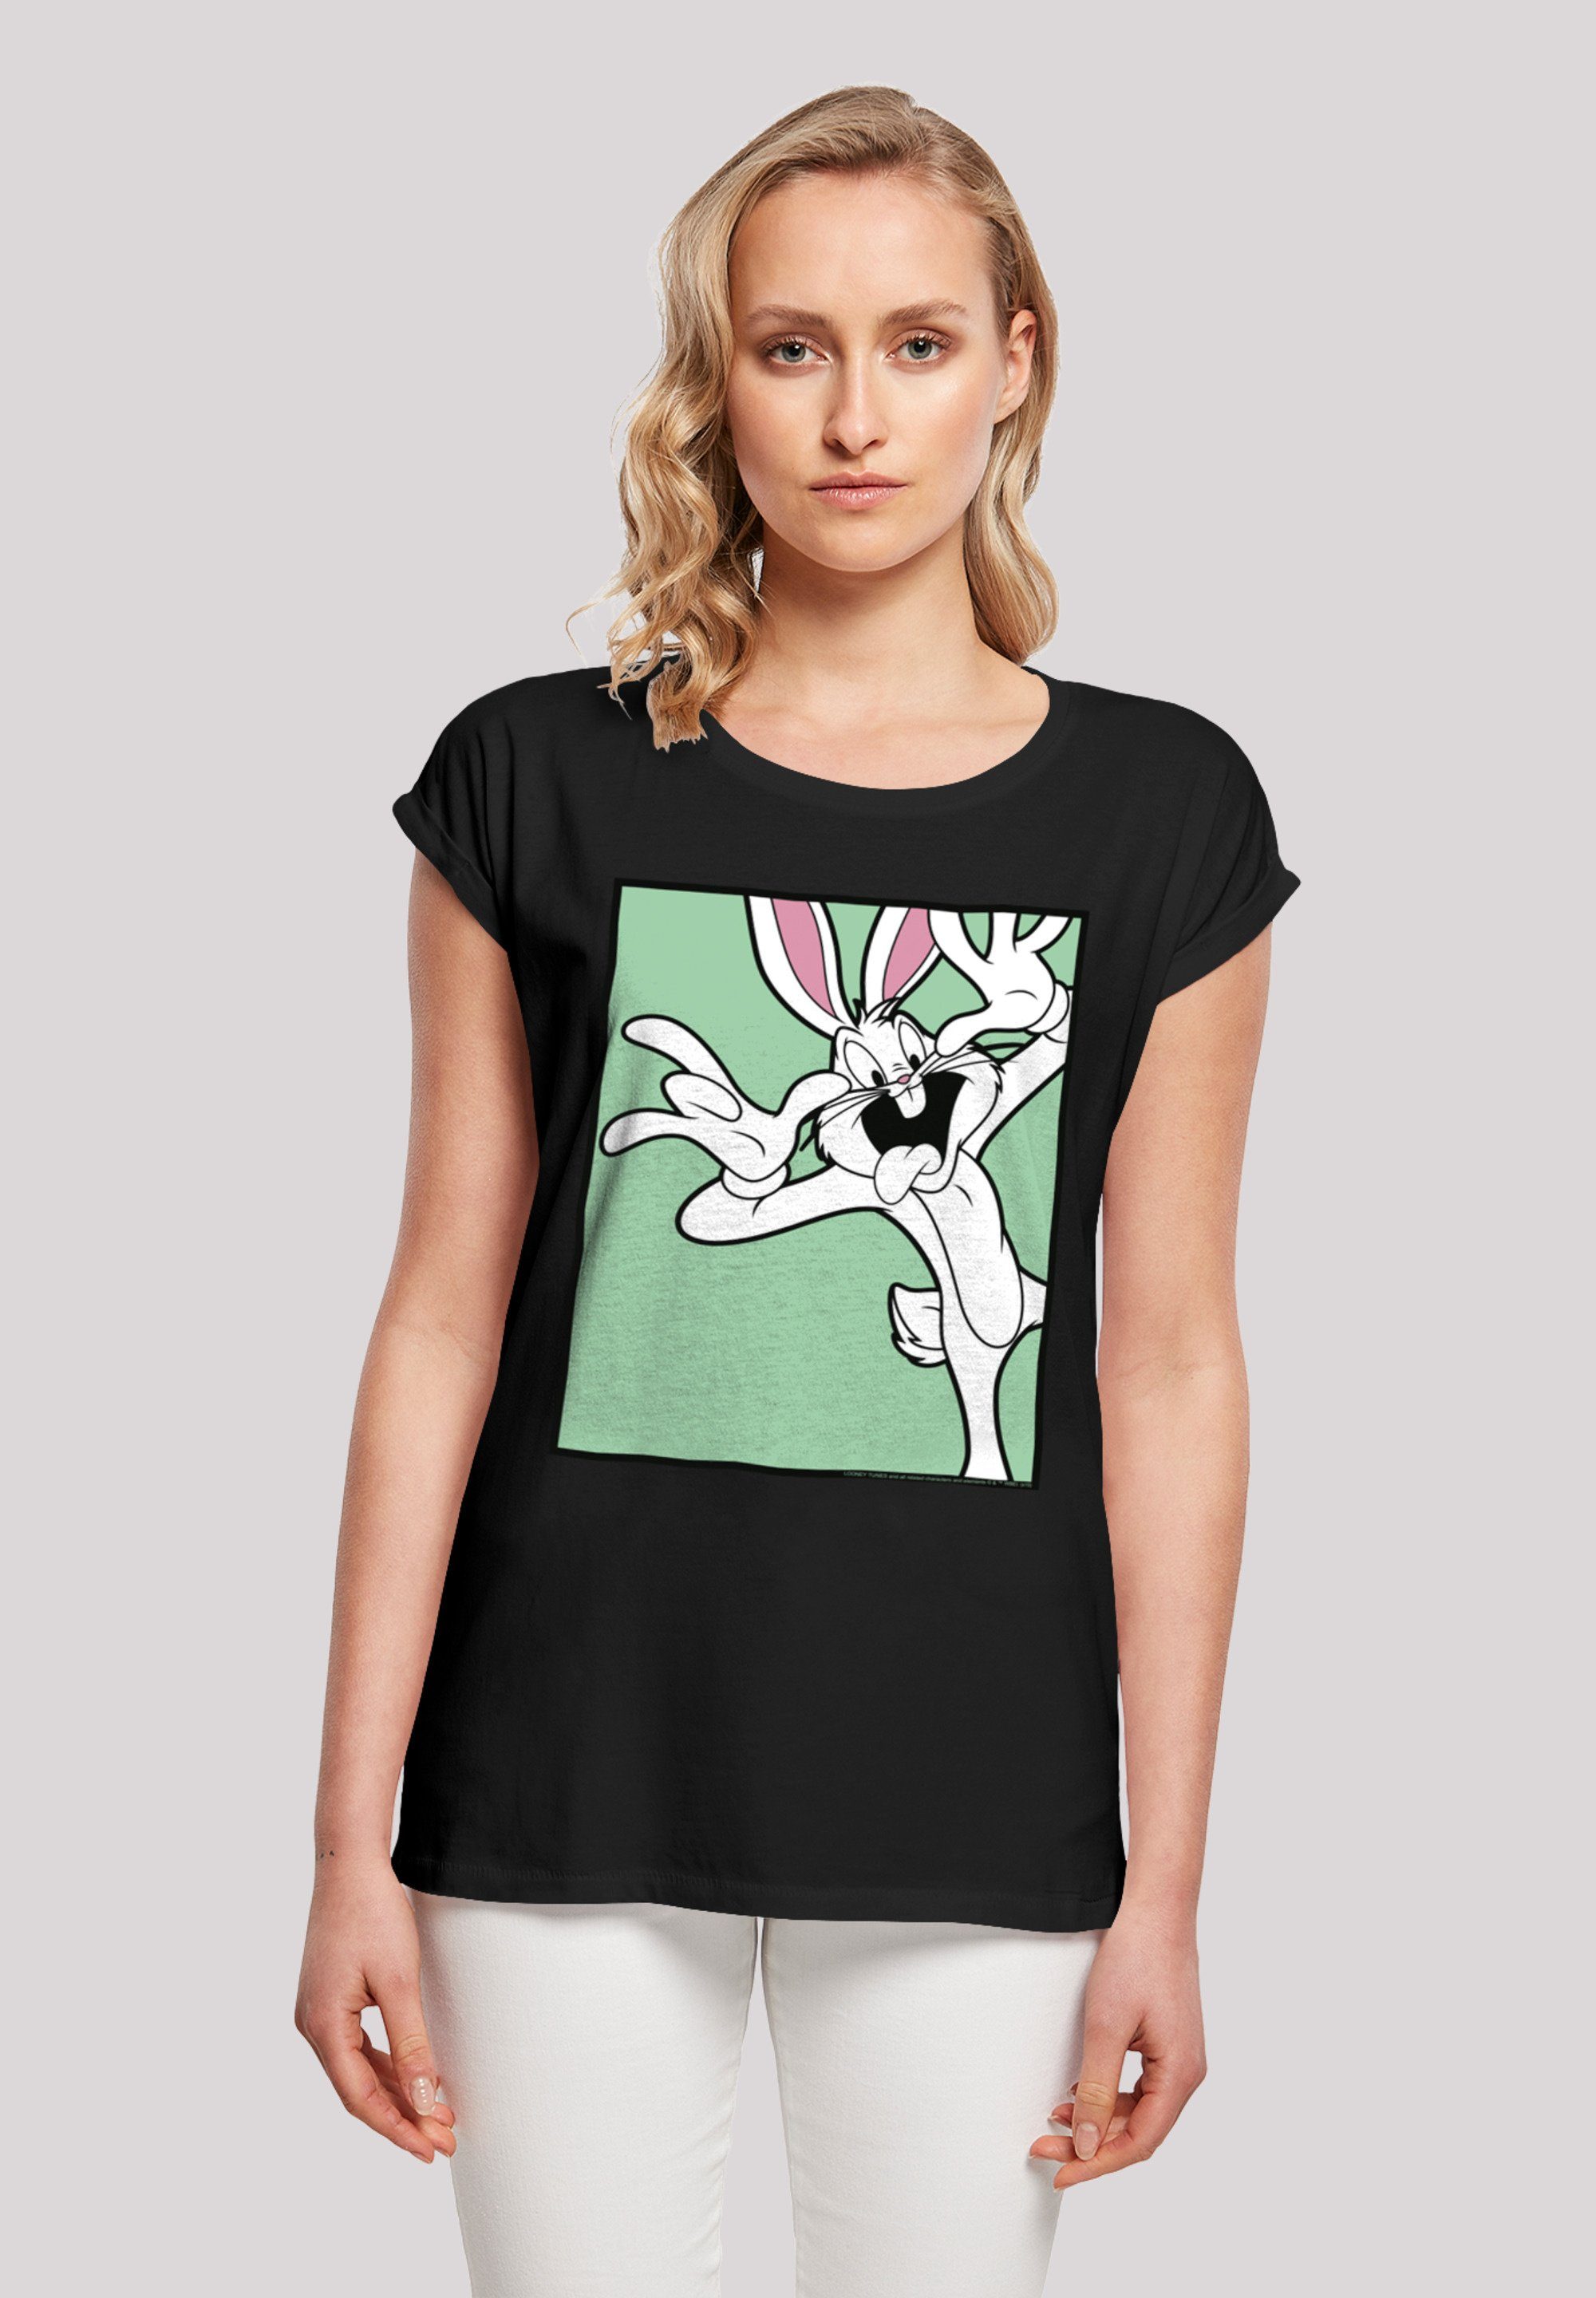 Tragekomfort Tunes F4NT4STIC Baumwollstoff Bugs Looney Bunny Face Funny T-Shirt weicher Print, hohem Sehr mit